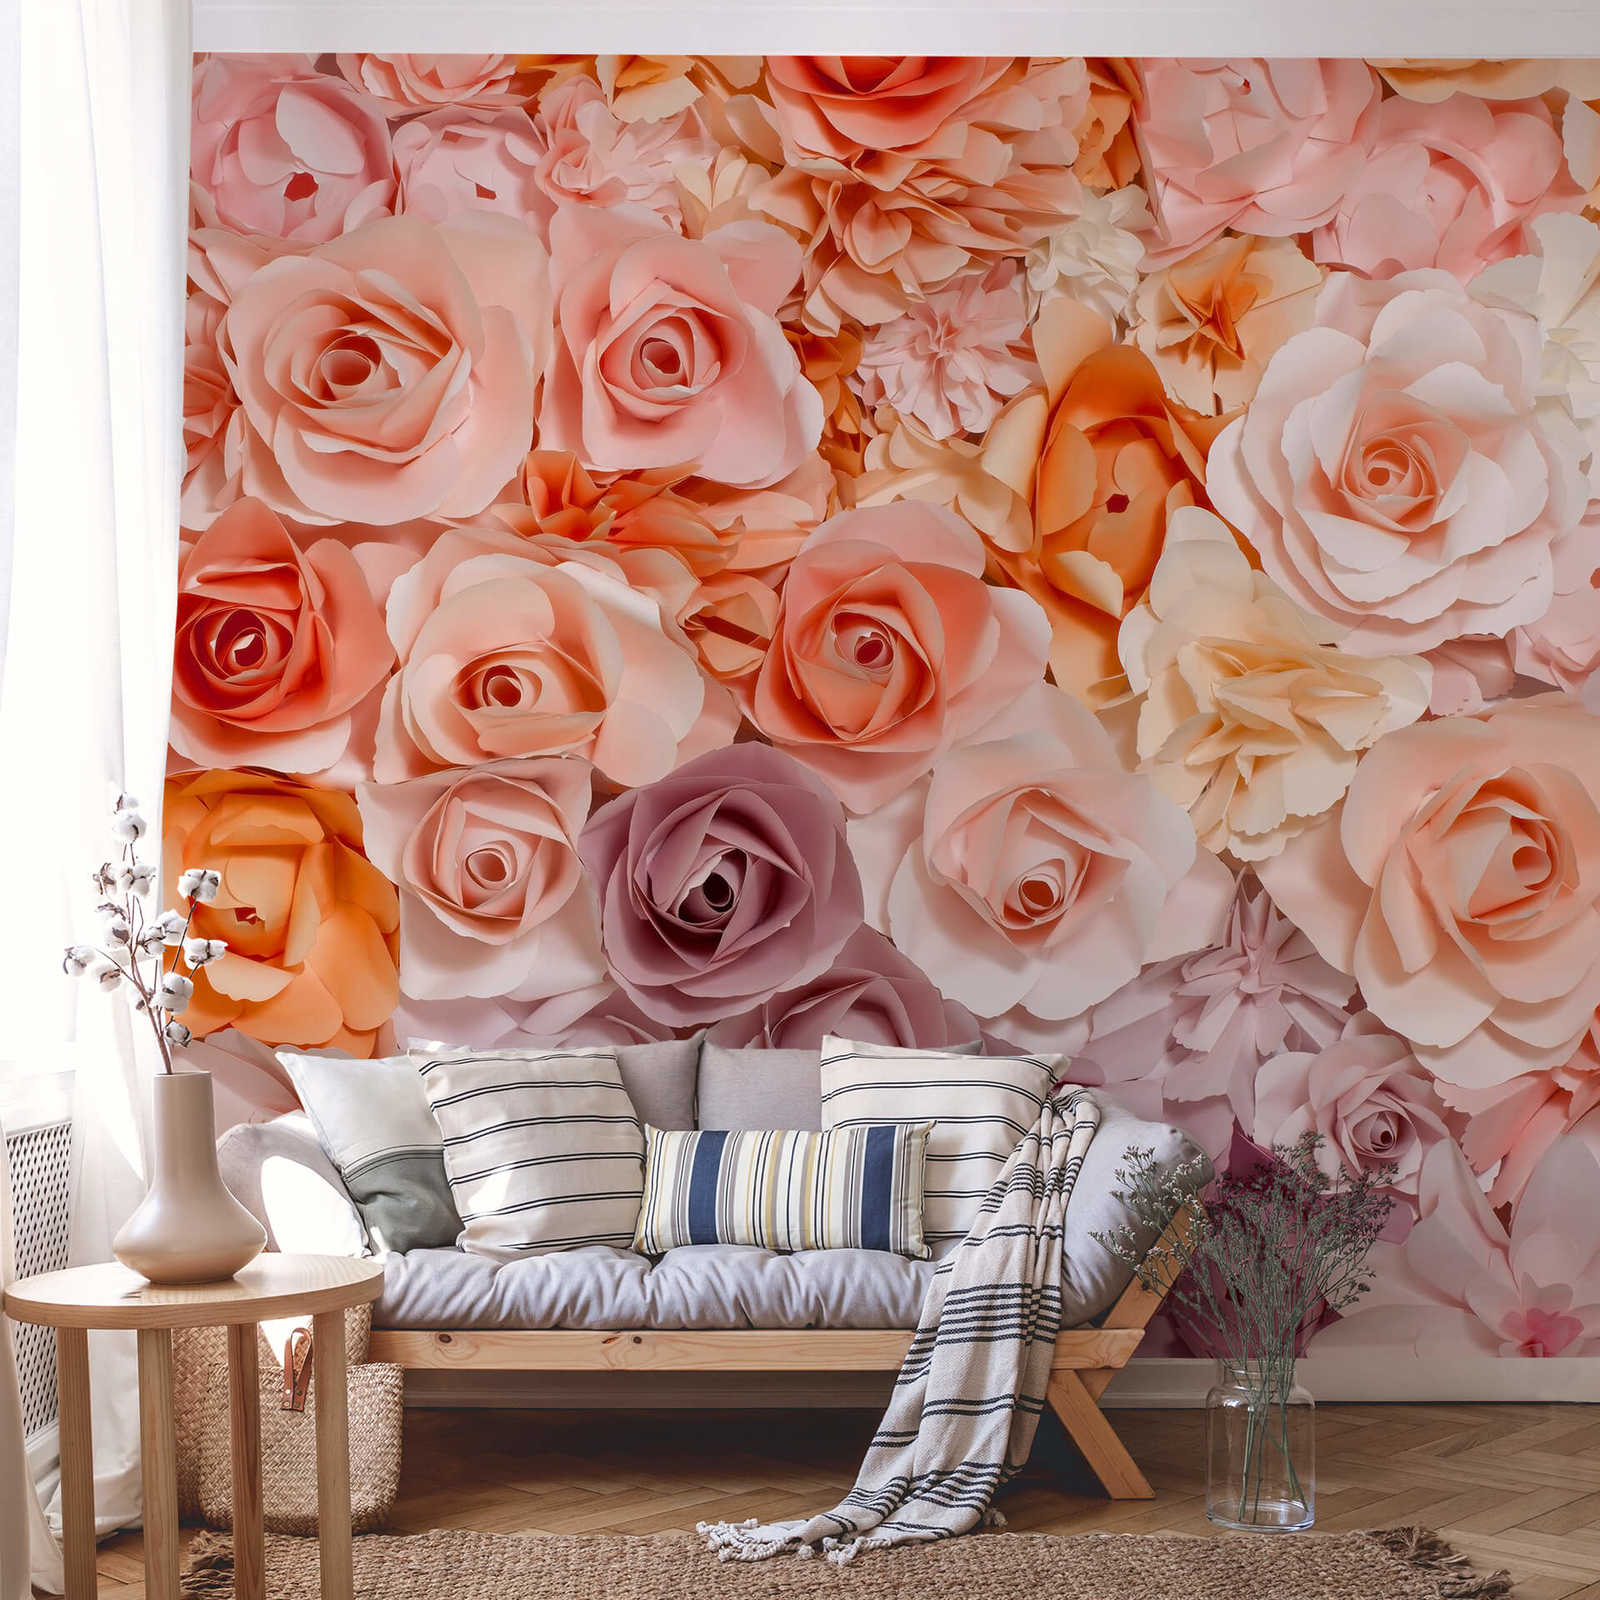             Rozen Behang 3D Bloemenpatroon - Roze, Wit, Oranje
        